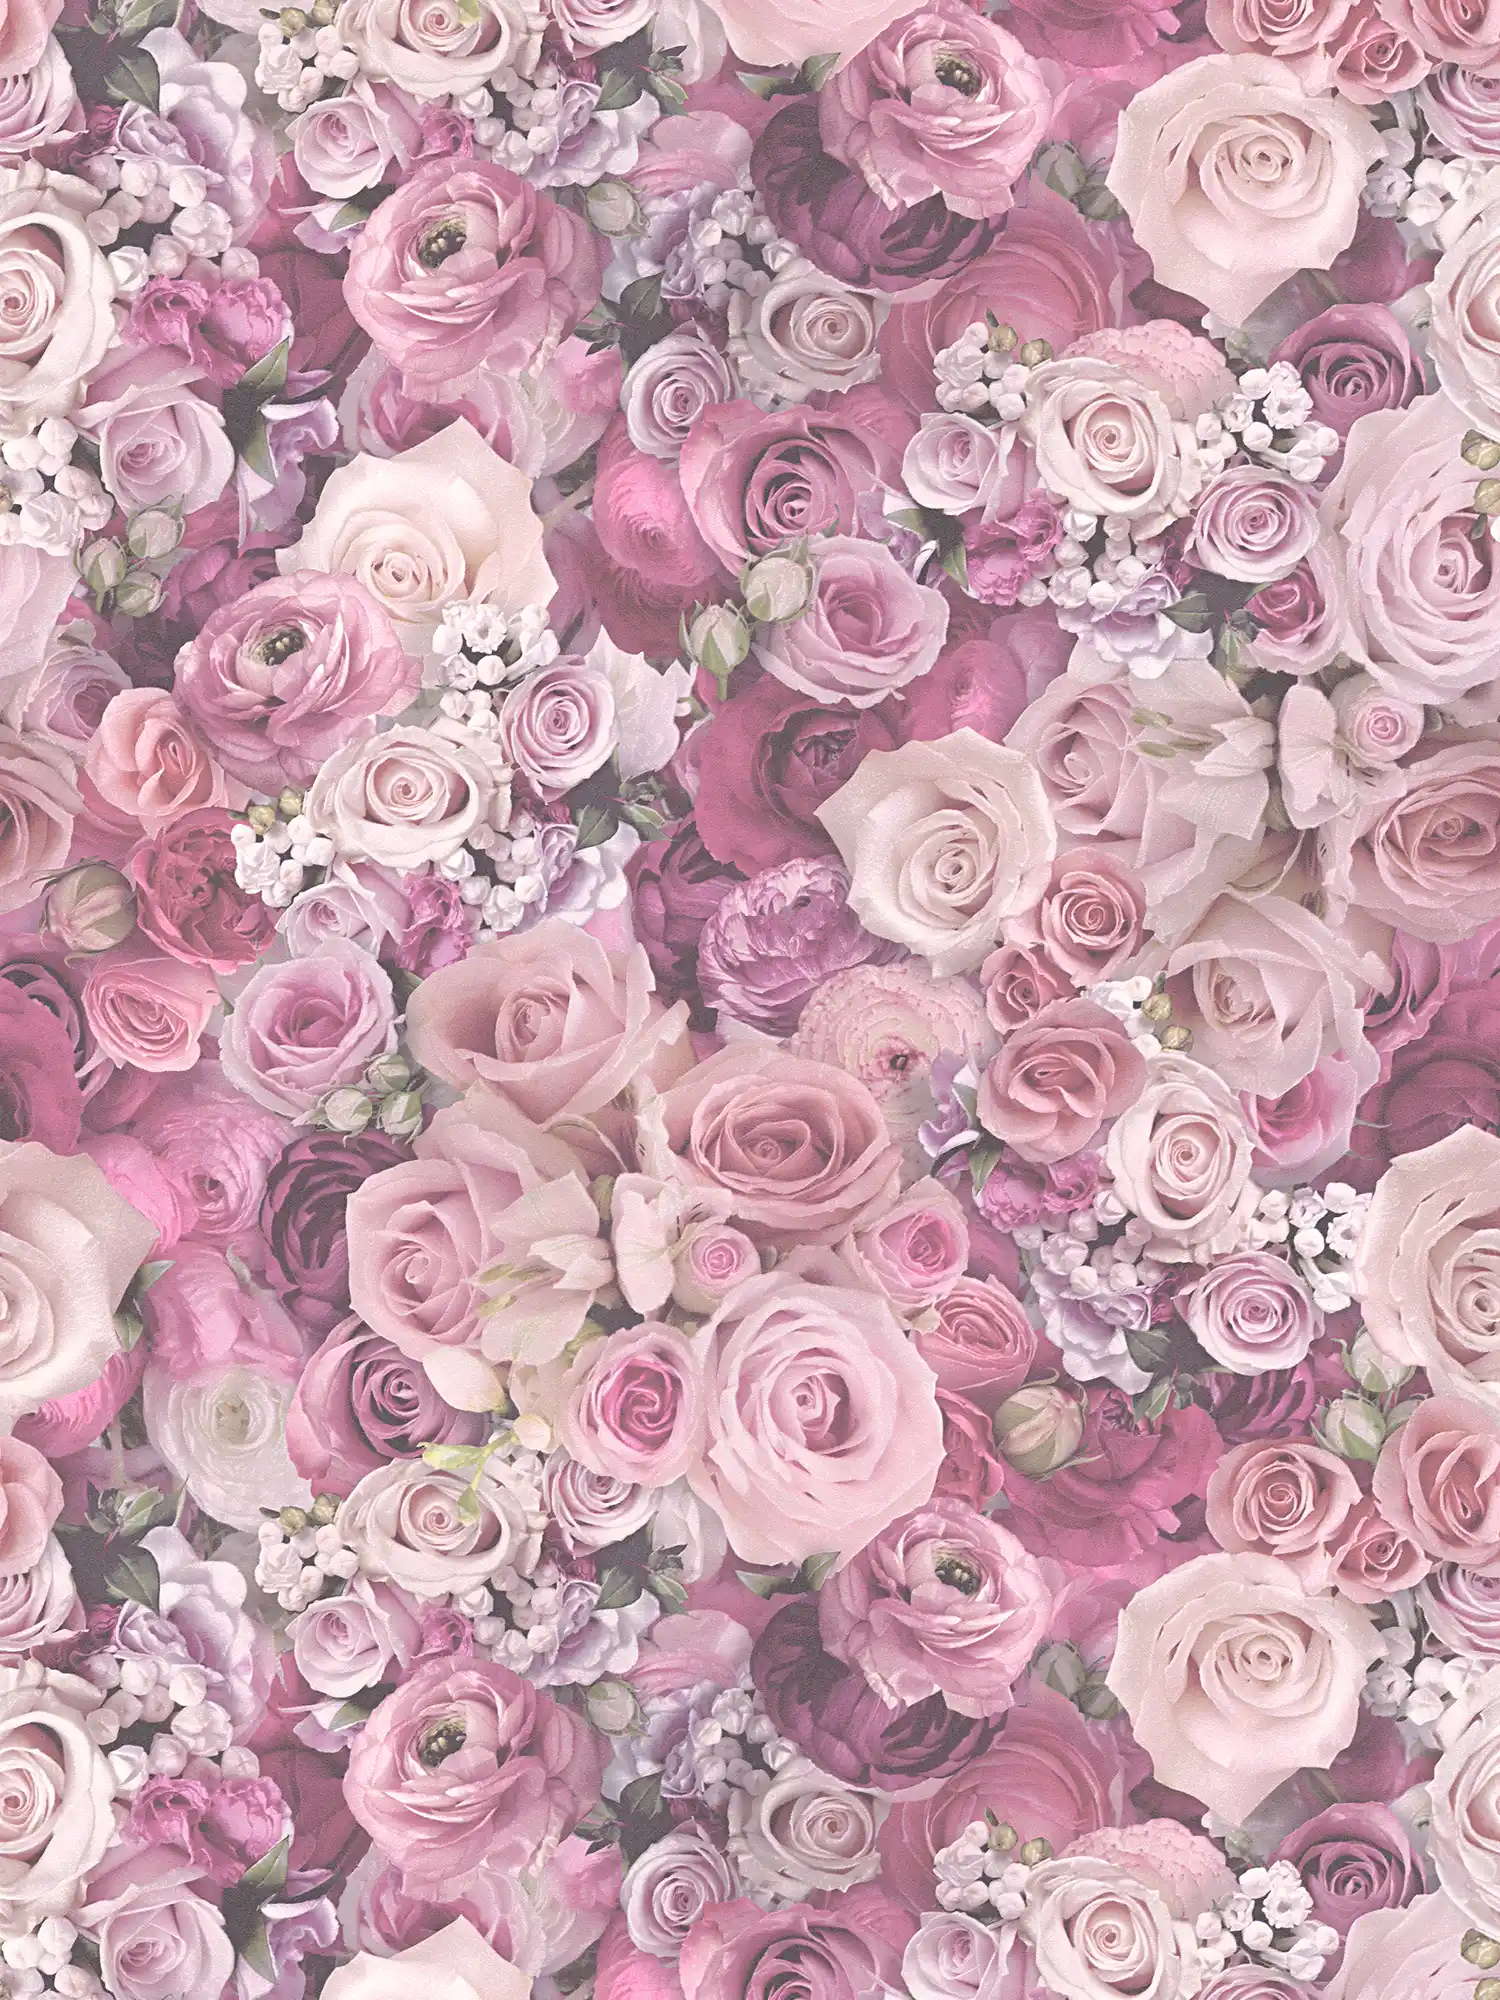 3D non-woven wallpaper roses flowers motif - purple
